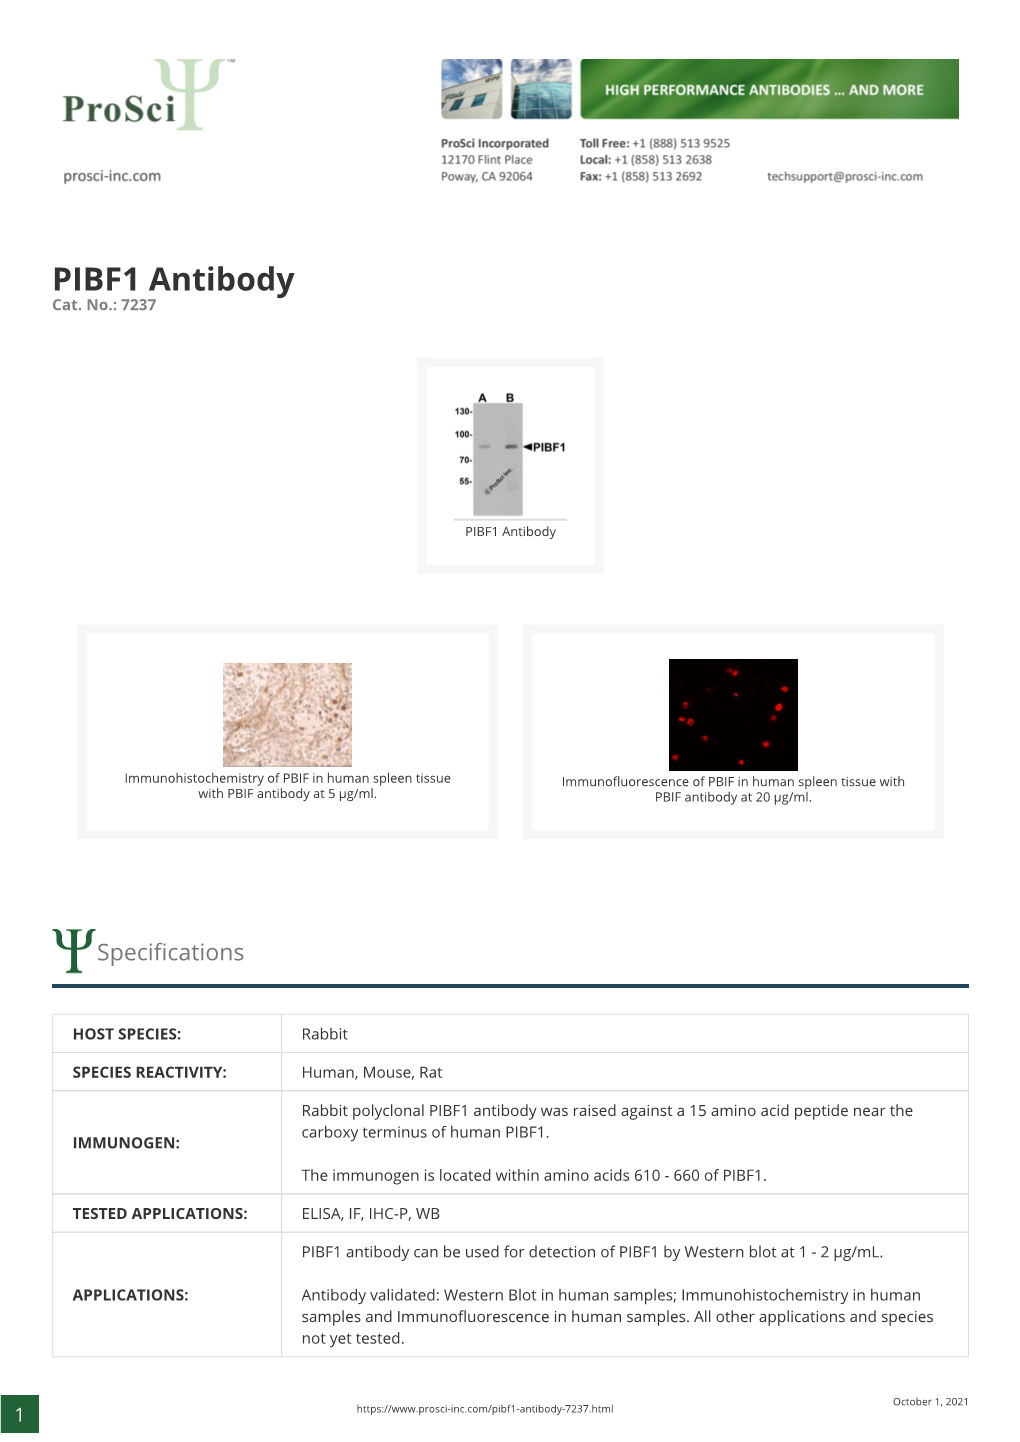 PIBF1 Antibody Cat